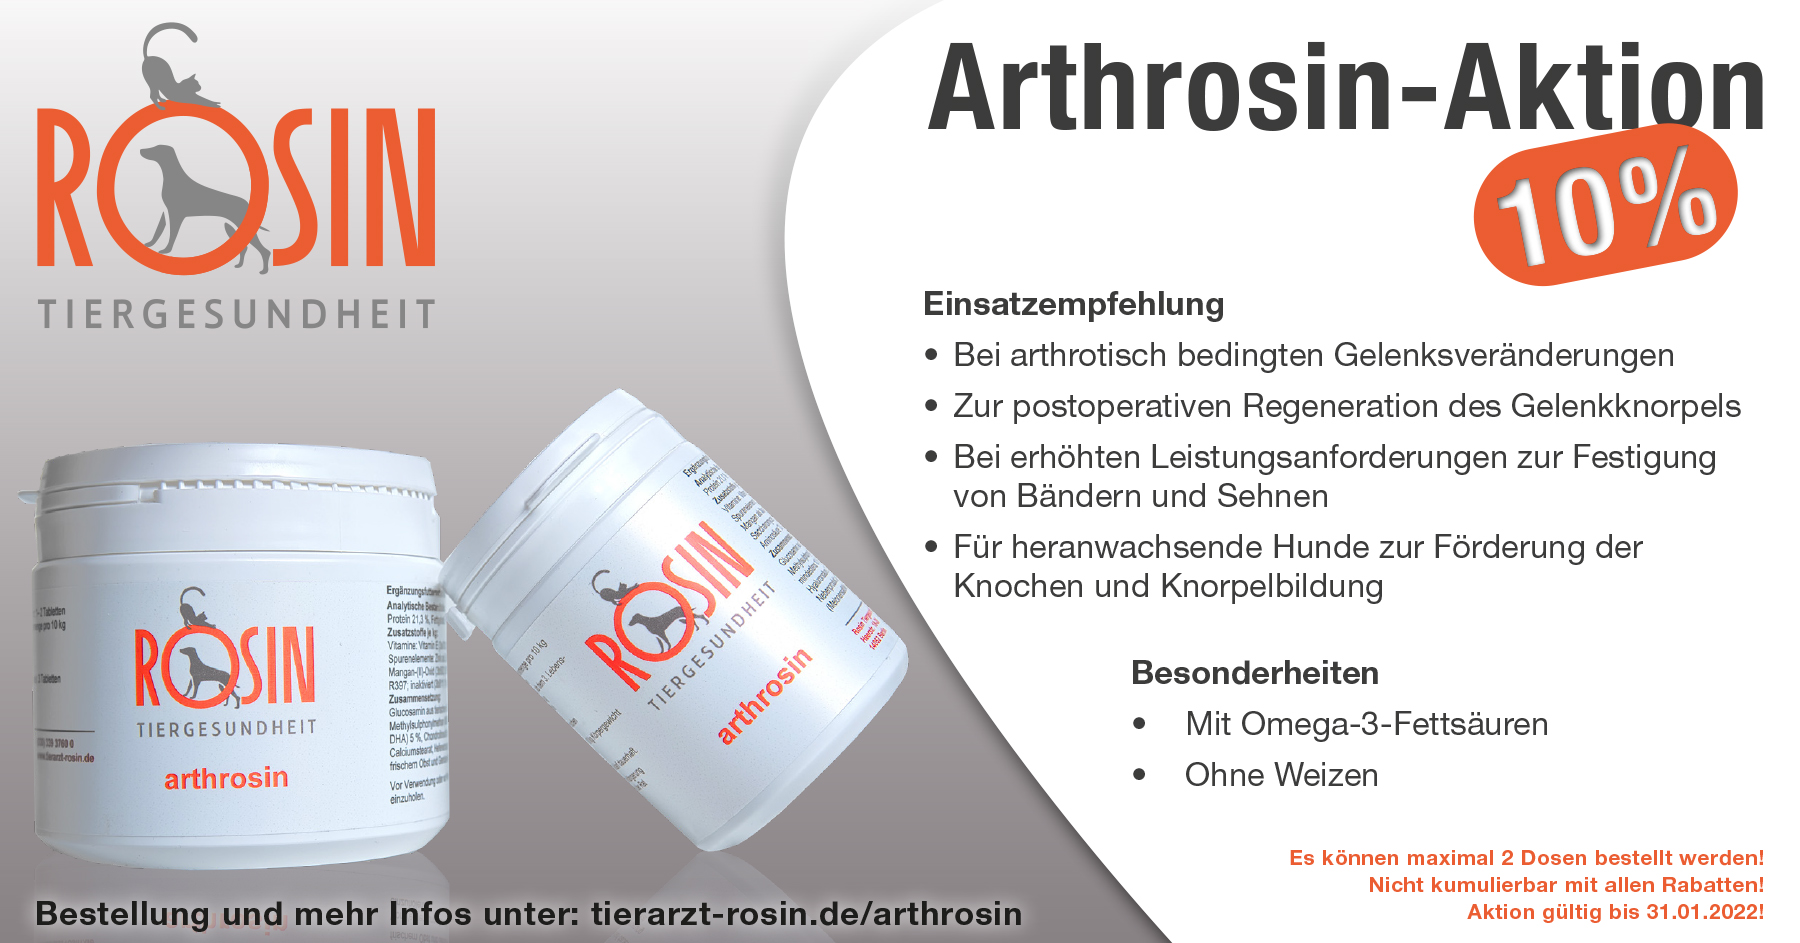 rosin-tiergesundheit-arthrosin-aktion-10